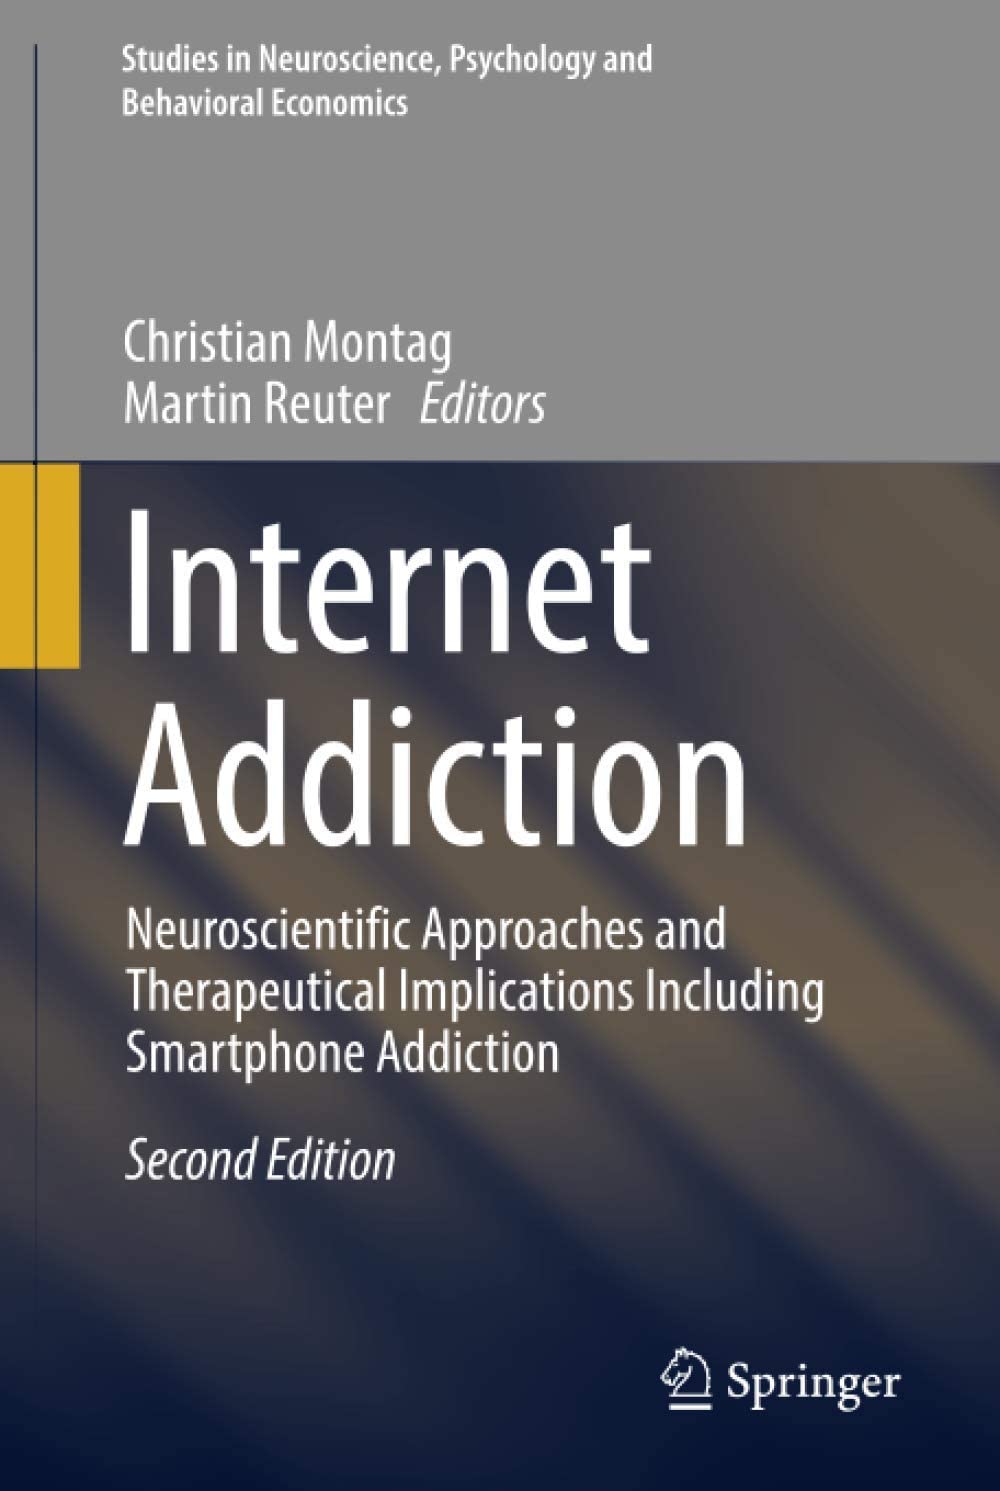 Internet Addiction (Studies in Neuroscience, Psychology and Behavioral Economics)